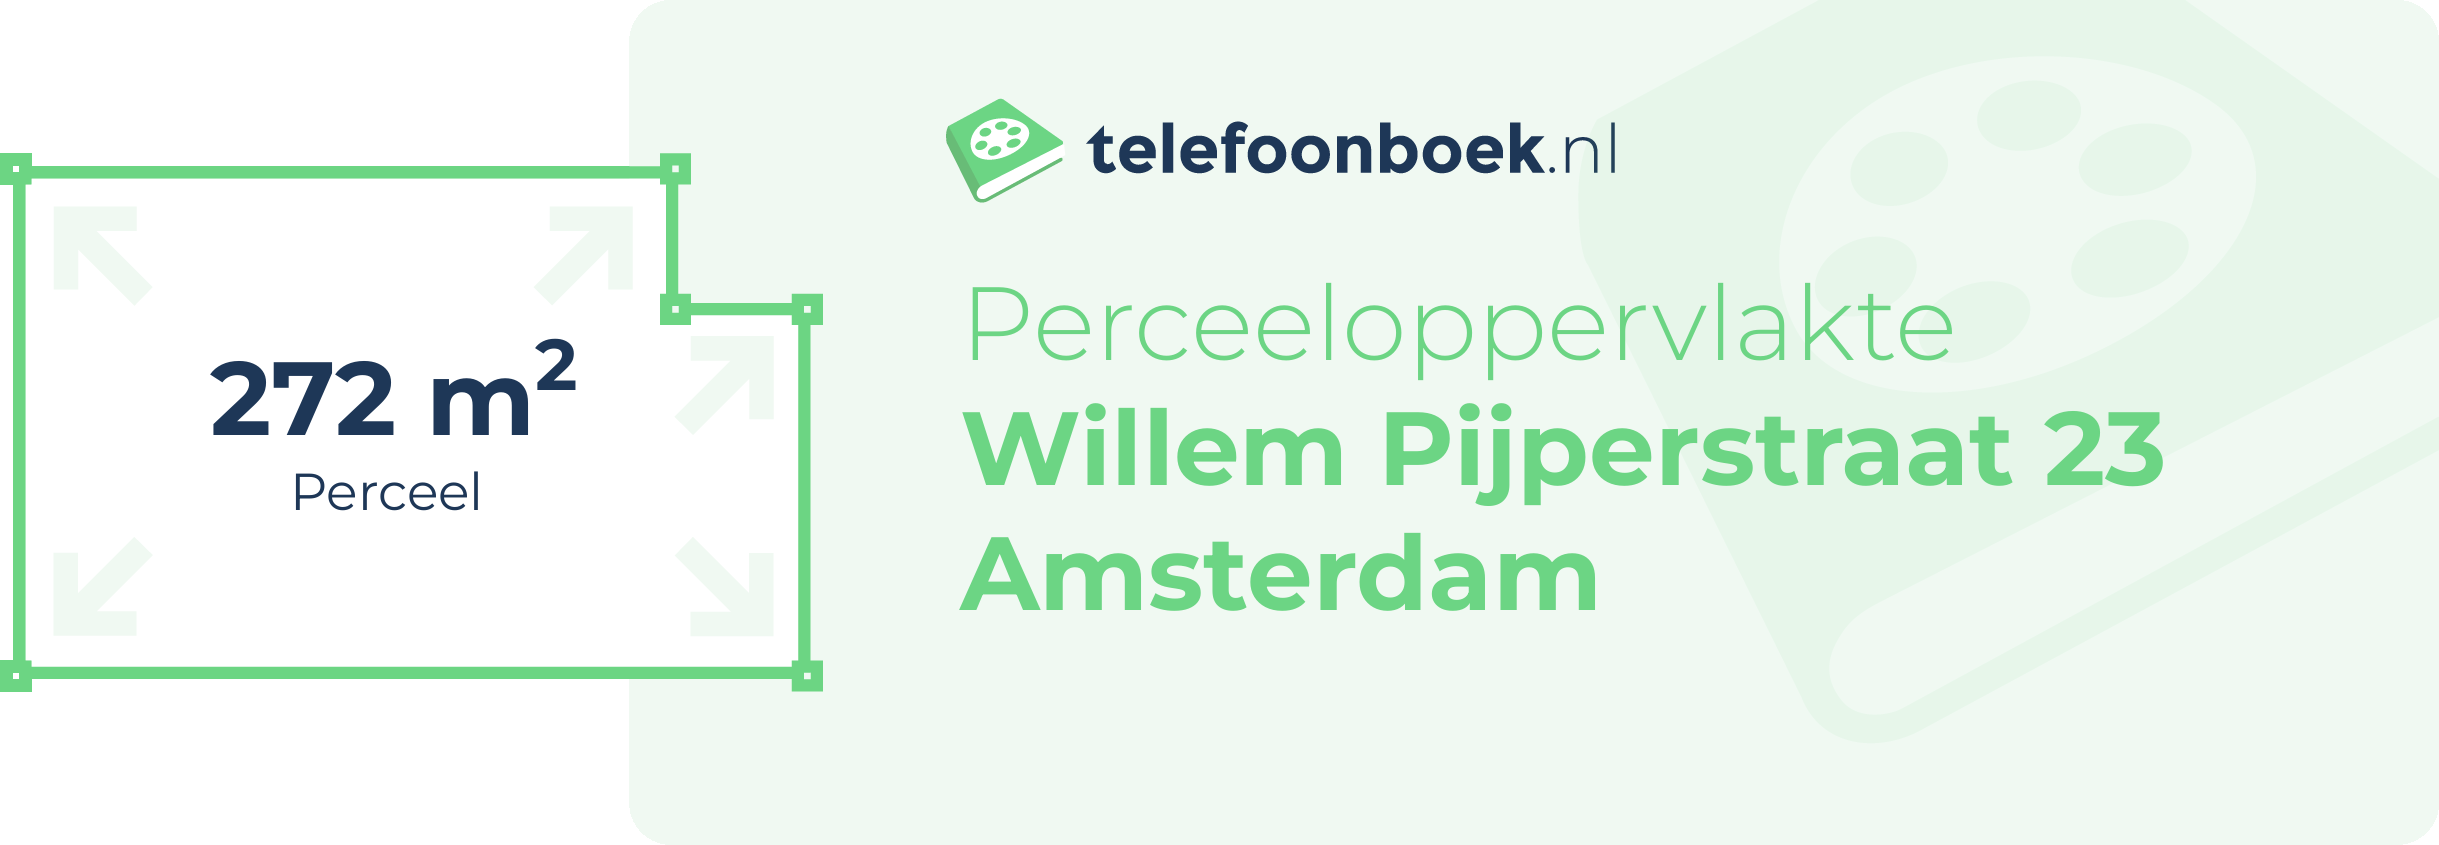 Perceeloppervlakte Willem Pijperstraat 23 Amsterdam